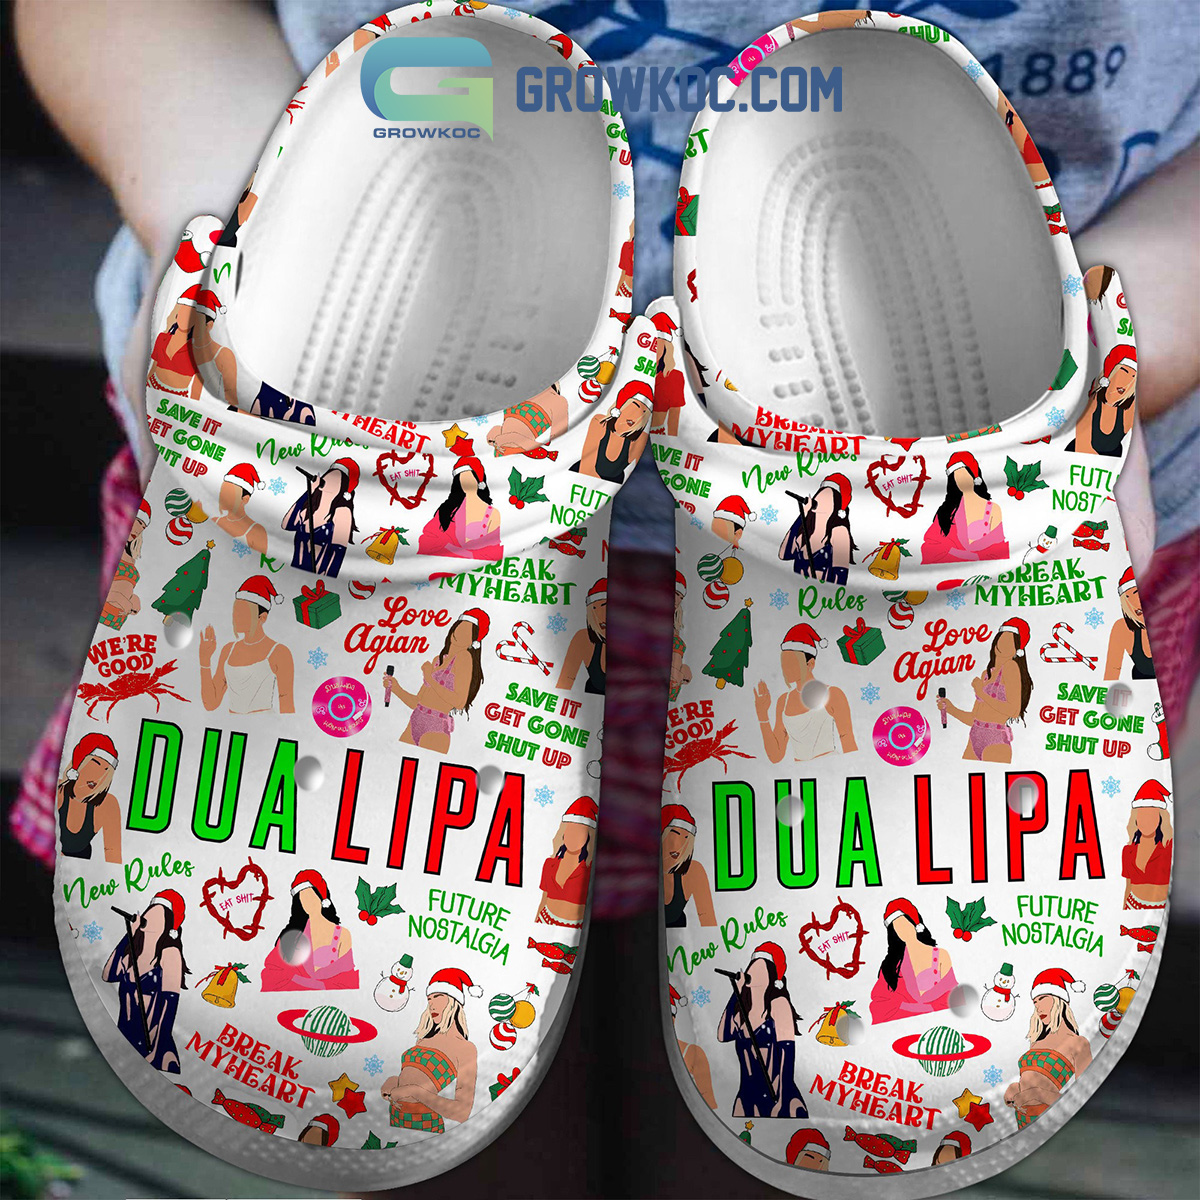 Dualipa Future Nostalgia Save It Get Gone Shut Up Clogs Crocs